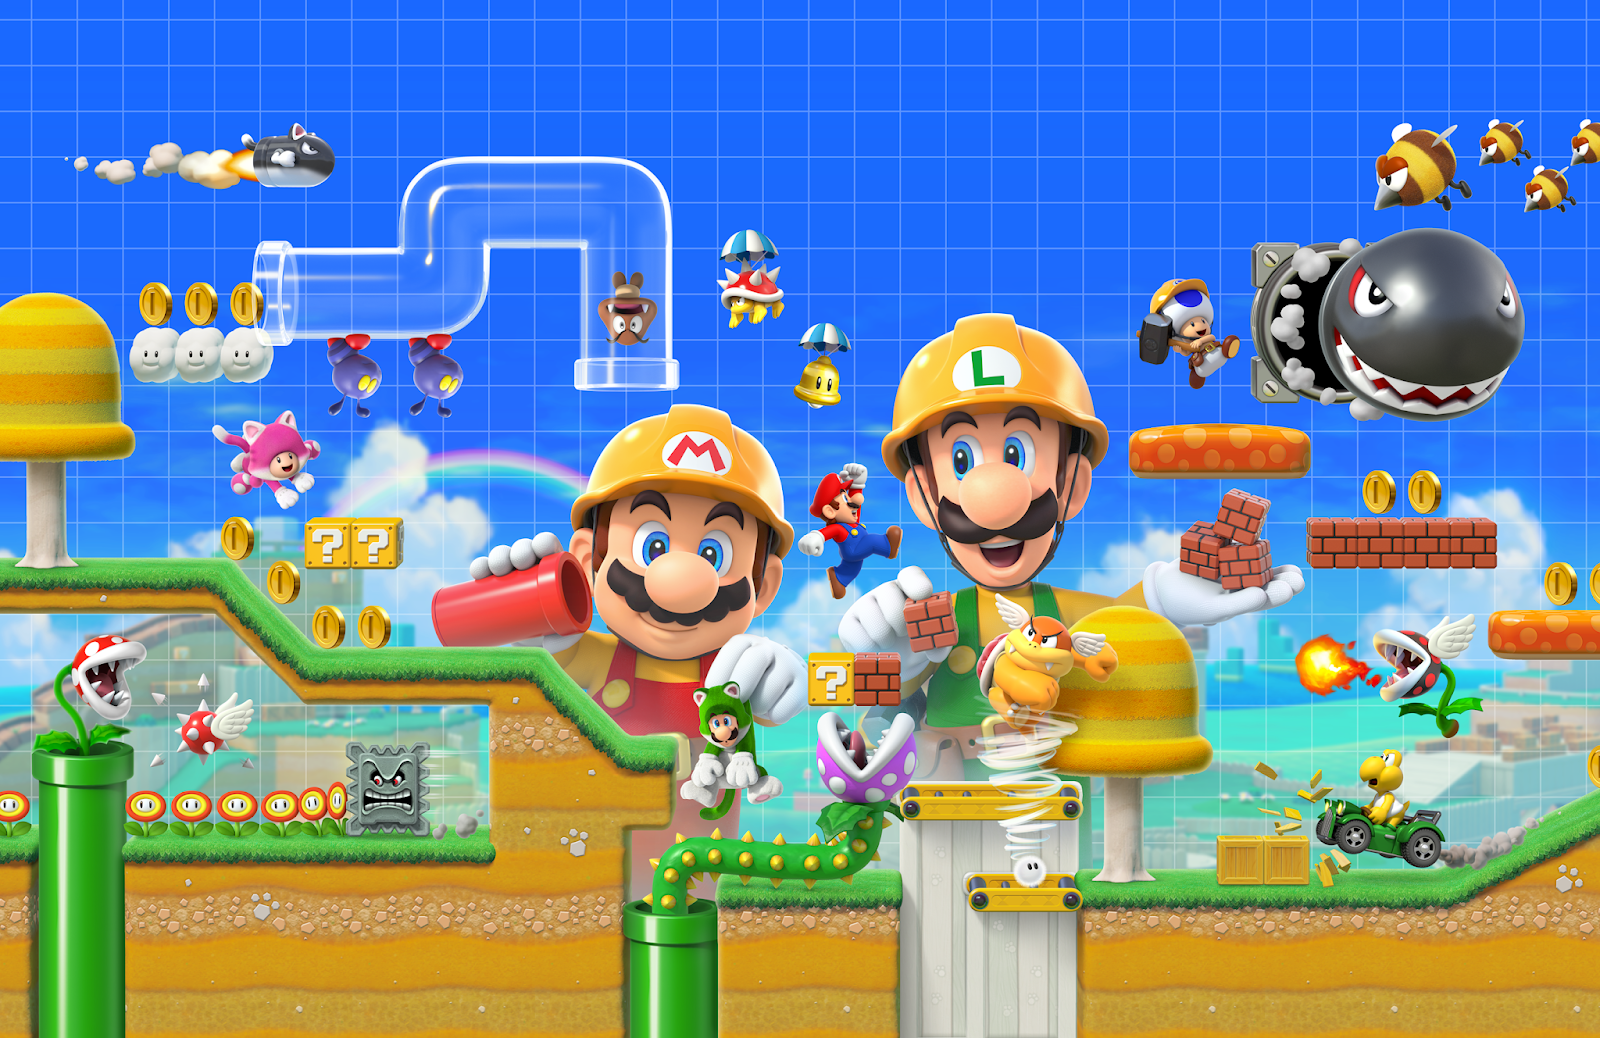 Super Mario  Novo jogo 2D pode estar próximo de ser anunciado